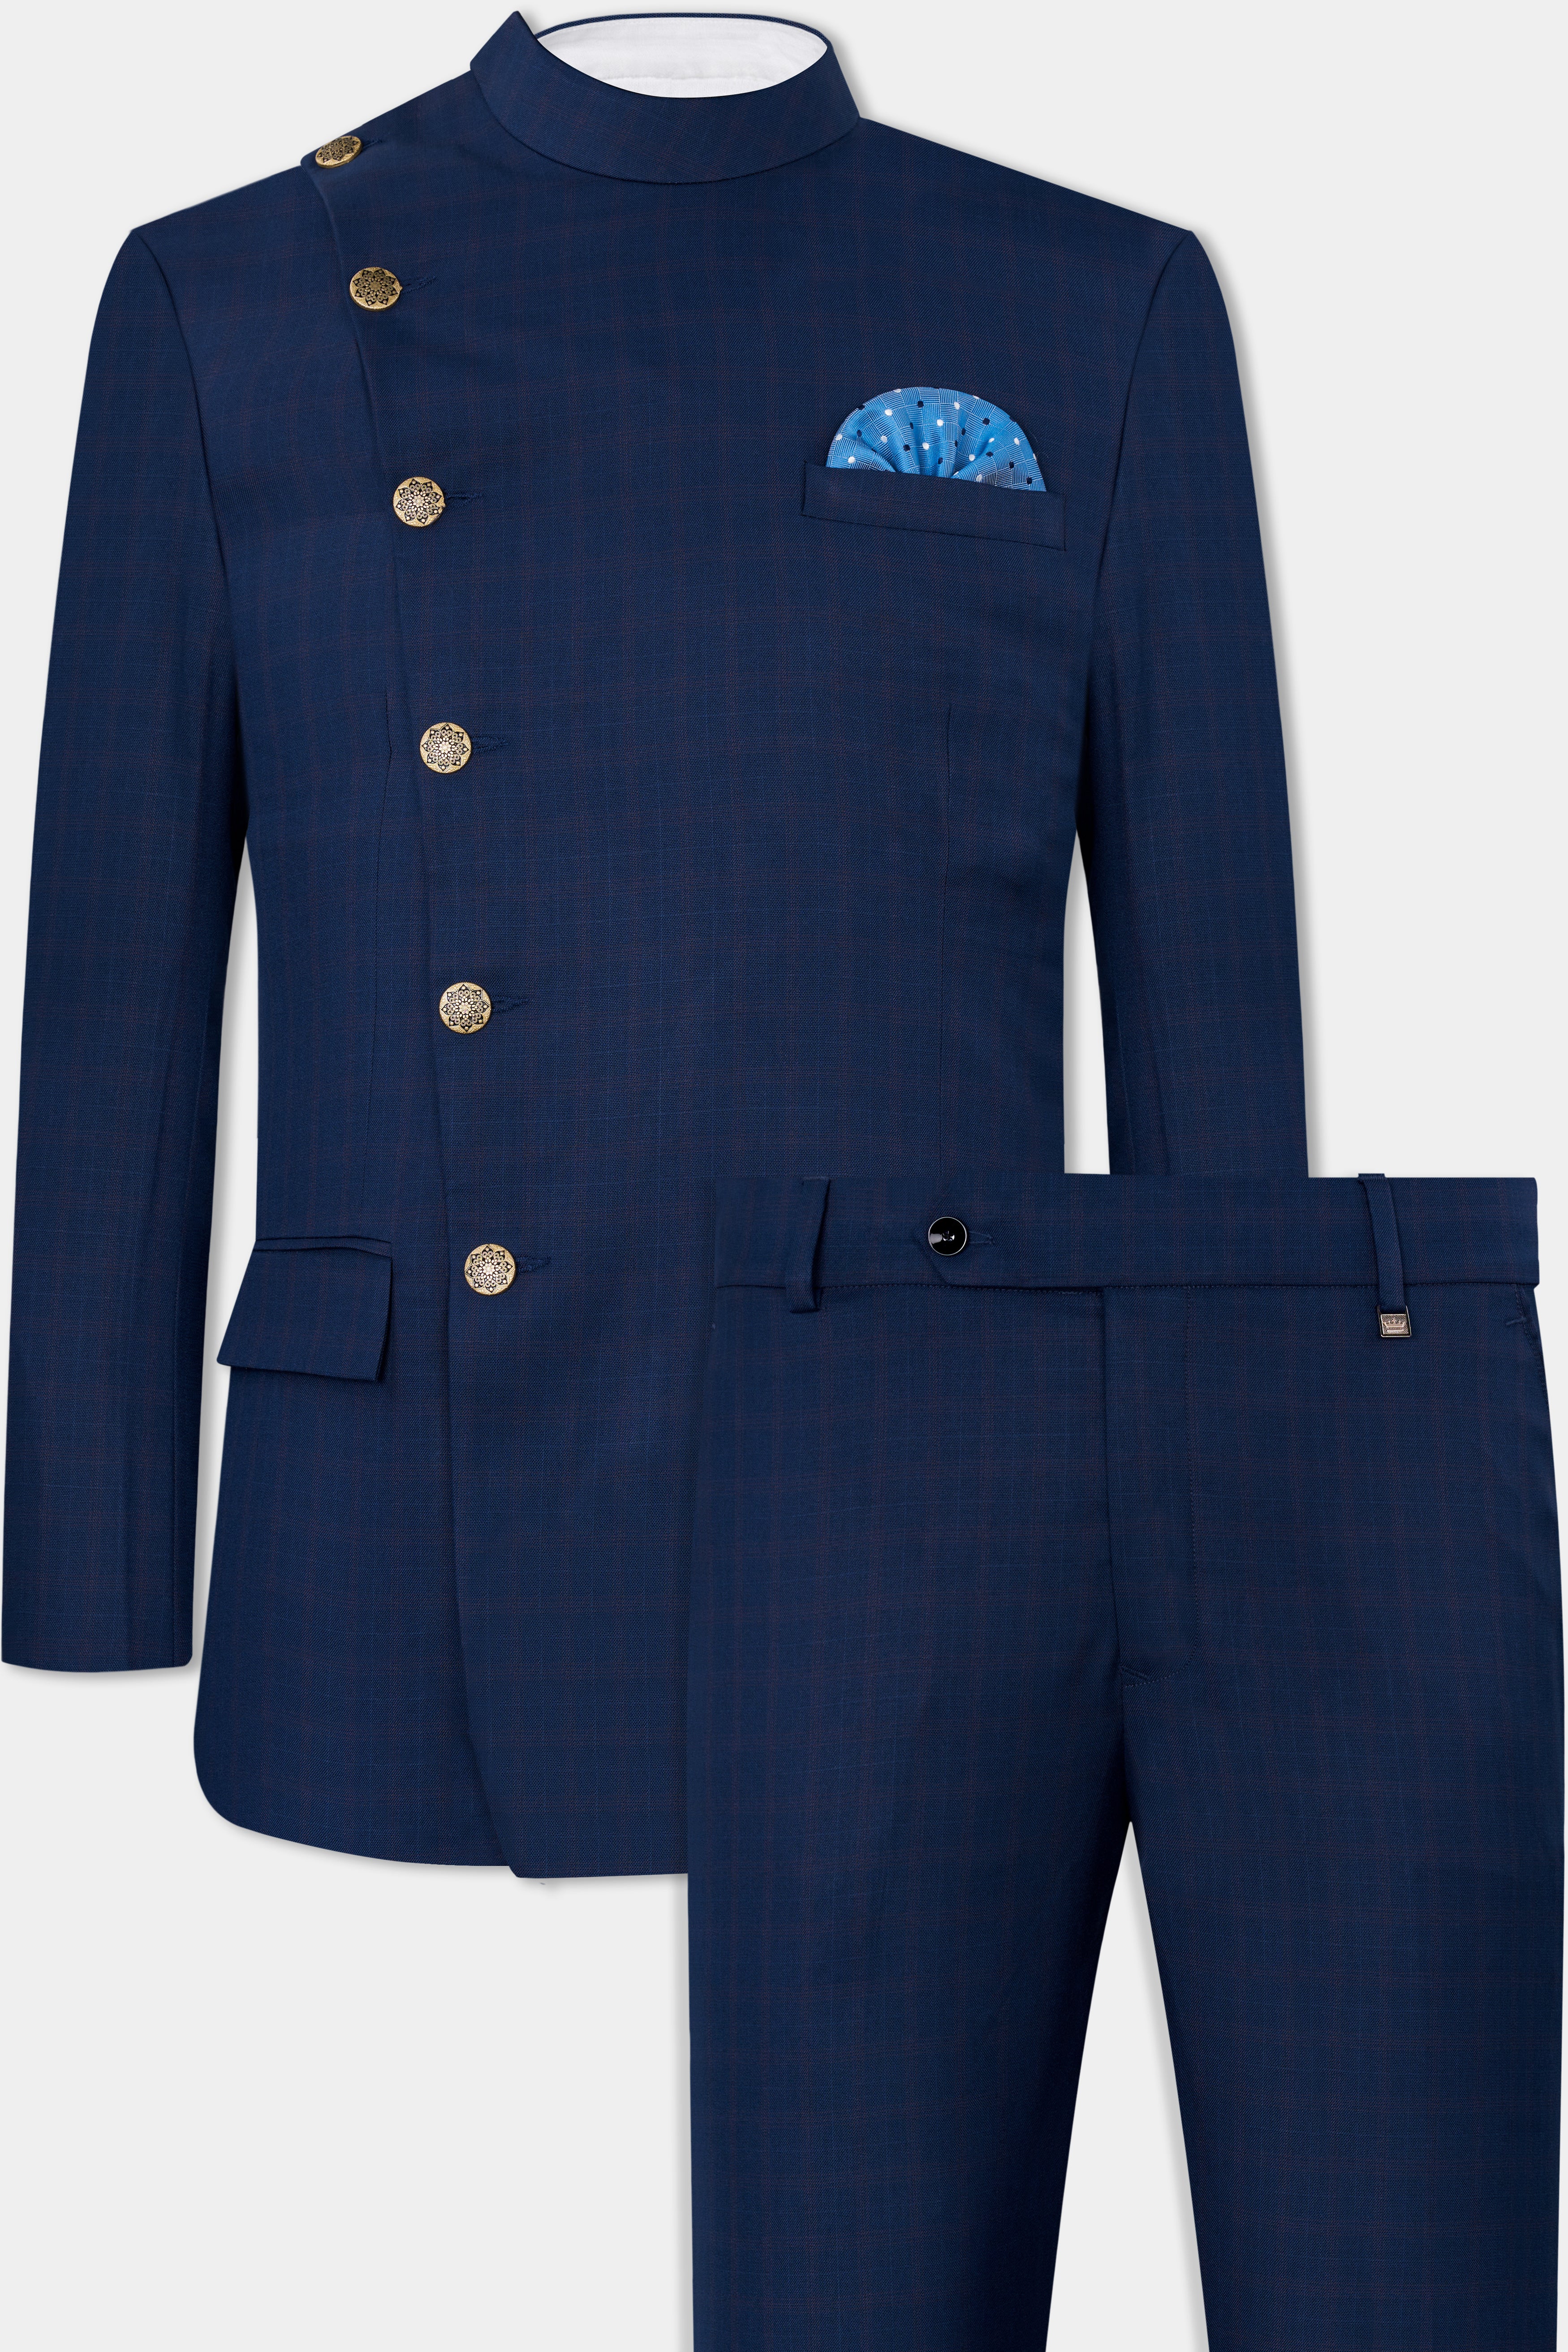 Nile Blue Wool Rich Cross Buttoned Bandhgala Suit ST2806-CBG2-36,ST2806-CBG2-38,ST2806-CBG2-40,ST2806-CBG2-42,ST2806-CBG2-44,ST2806-CBG2-46,ST2806-CBG2-48,ST2806-CBG2-50,ST2806-CBG2-52,ST2806-CBG2-54,ST2806-CBG2-56,ST2806-CBG2-58,ST2806-CBG2-60